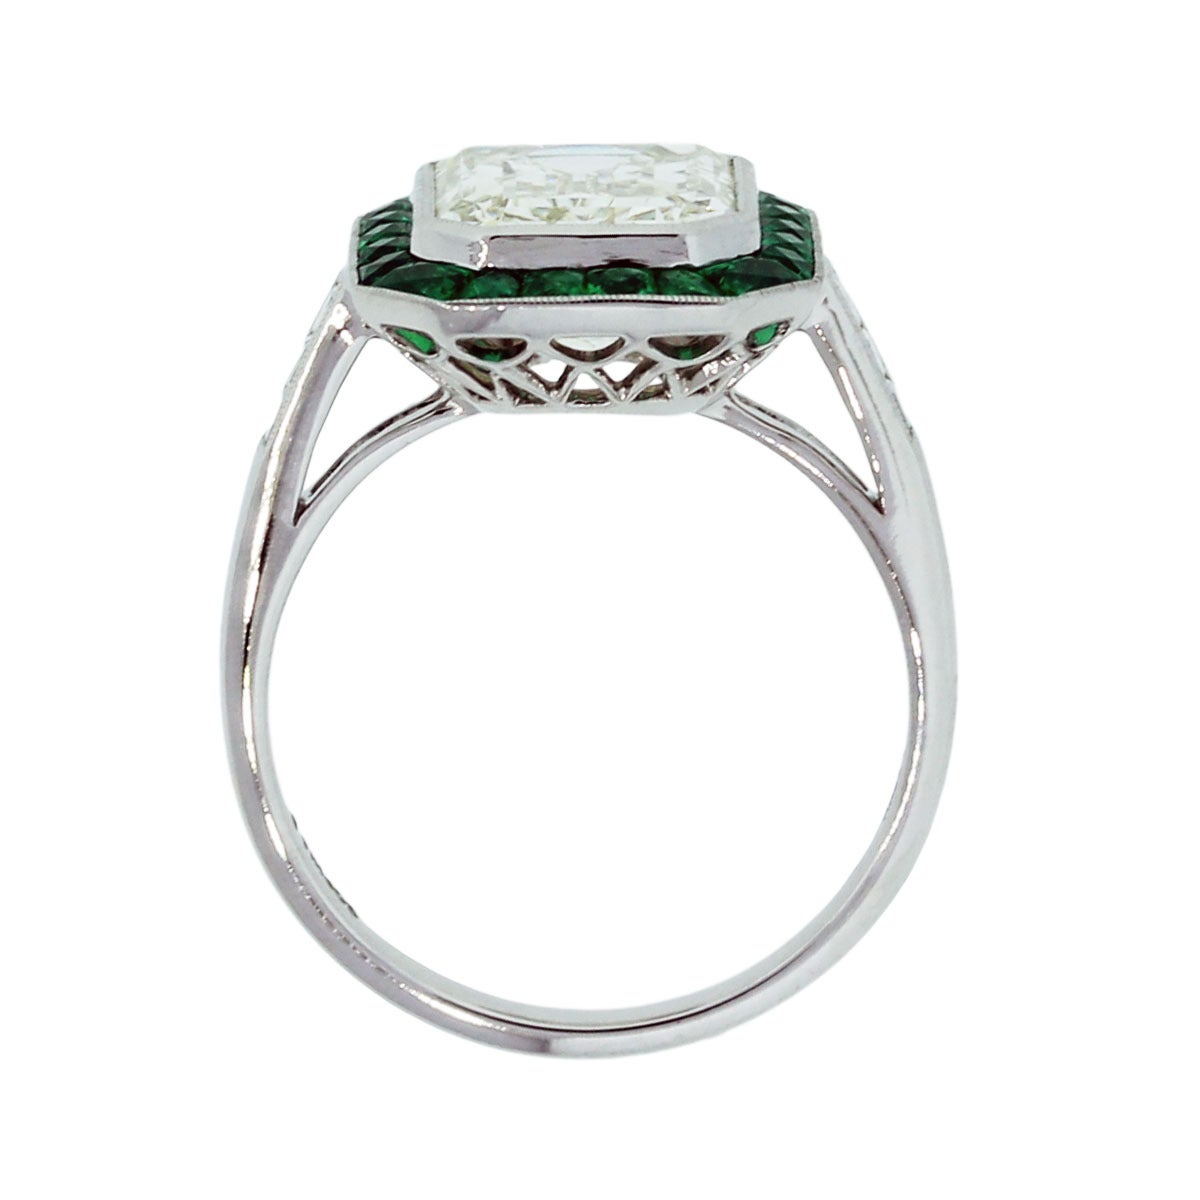 Style: Platinum 4.12ct Diamond Emerald Halo Engagement Ring
Material: Platinum
Center Diamond Details: 4.12 Emerald Cut Diamond, Diamond is J in color and VS in clarity
Mounting Diamond Details: Approximately 0.13ctw of Princess Cut Diamonds,